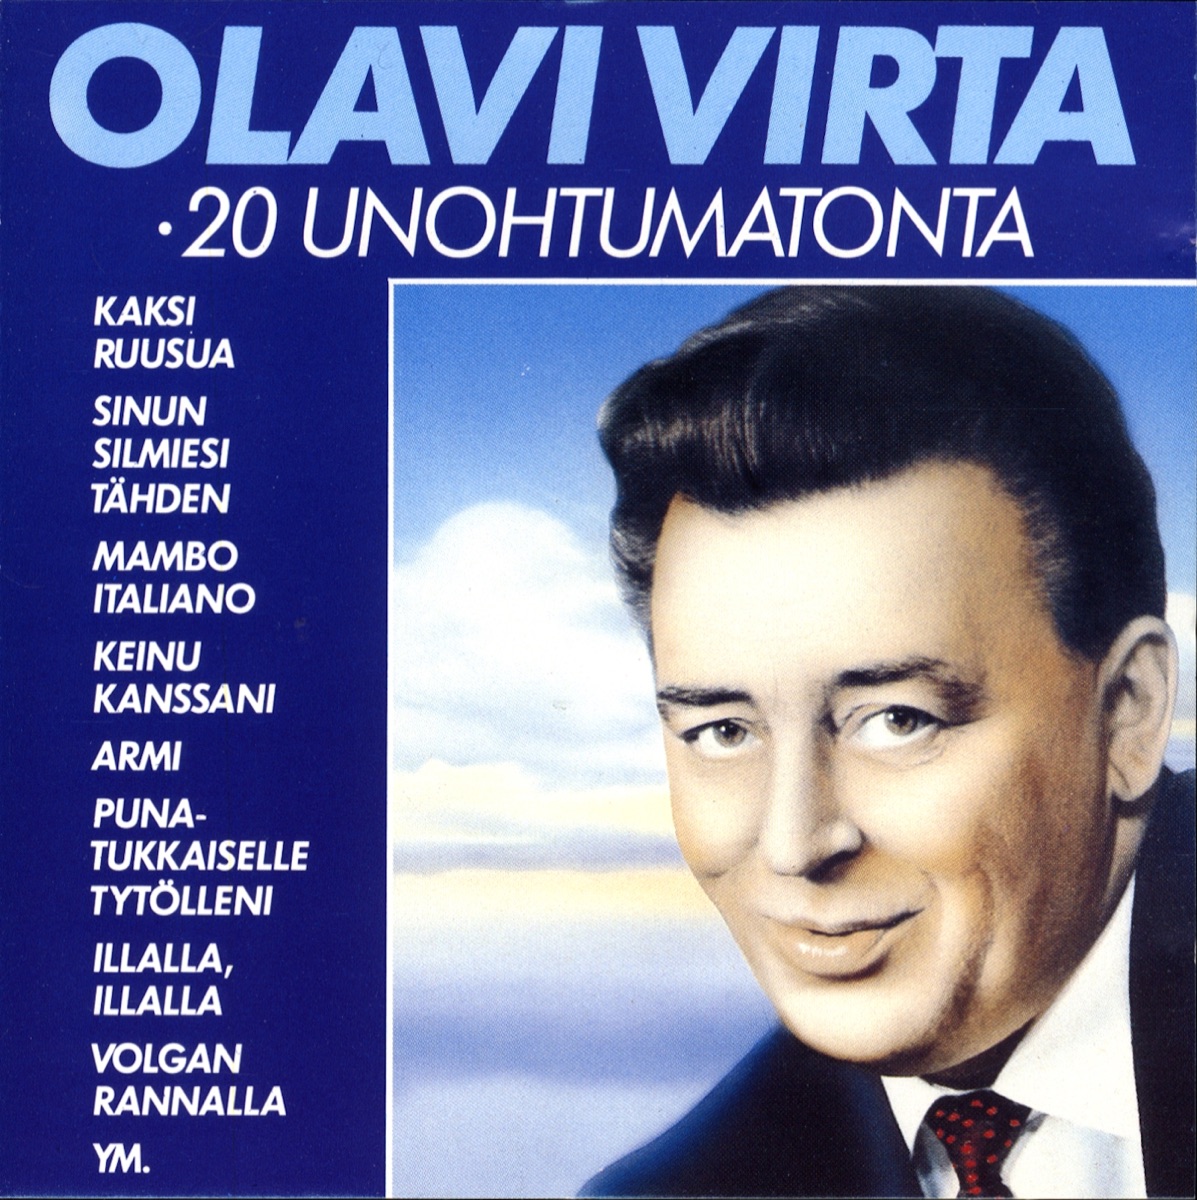 20 unohtumatonta - Album by Olavi Virta - Apple Music